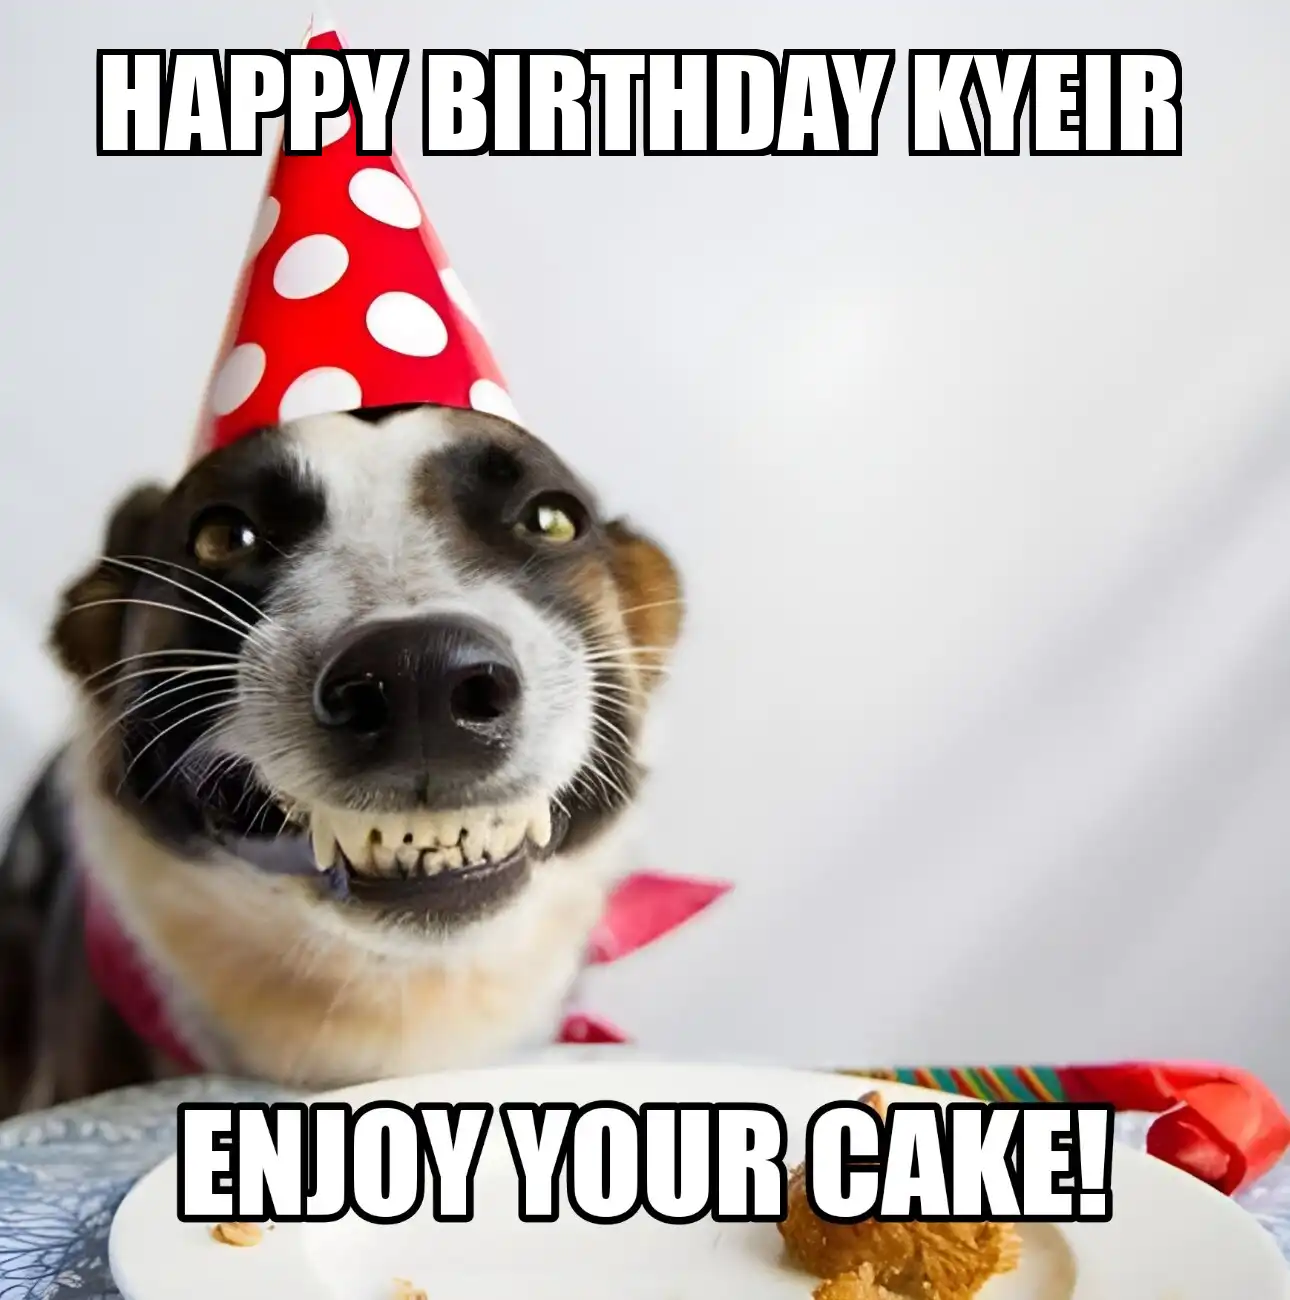 Happy Birthday Kyeir Enjoy Your Cake Dog Meme